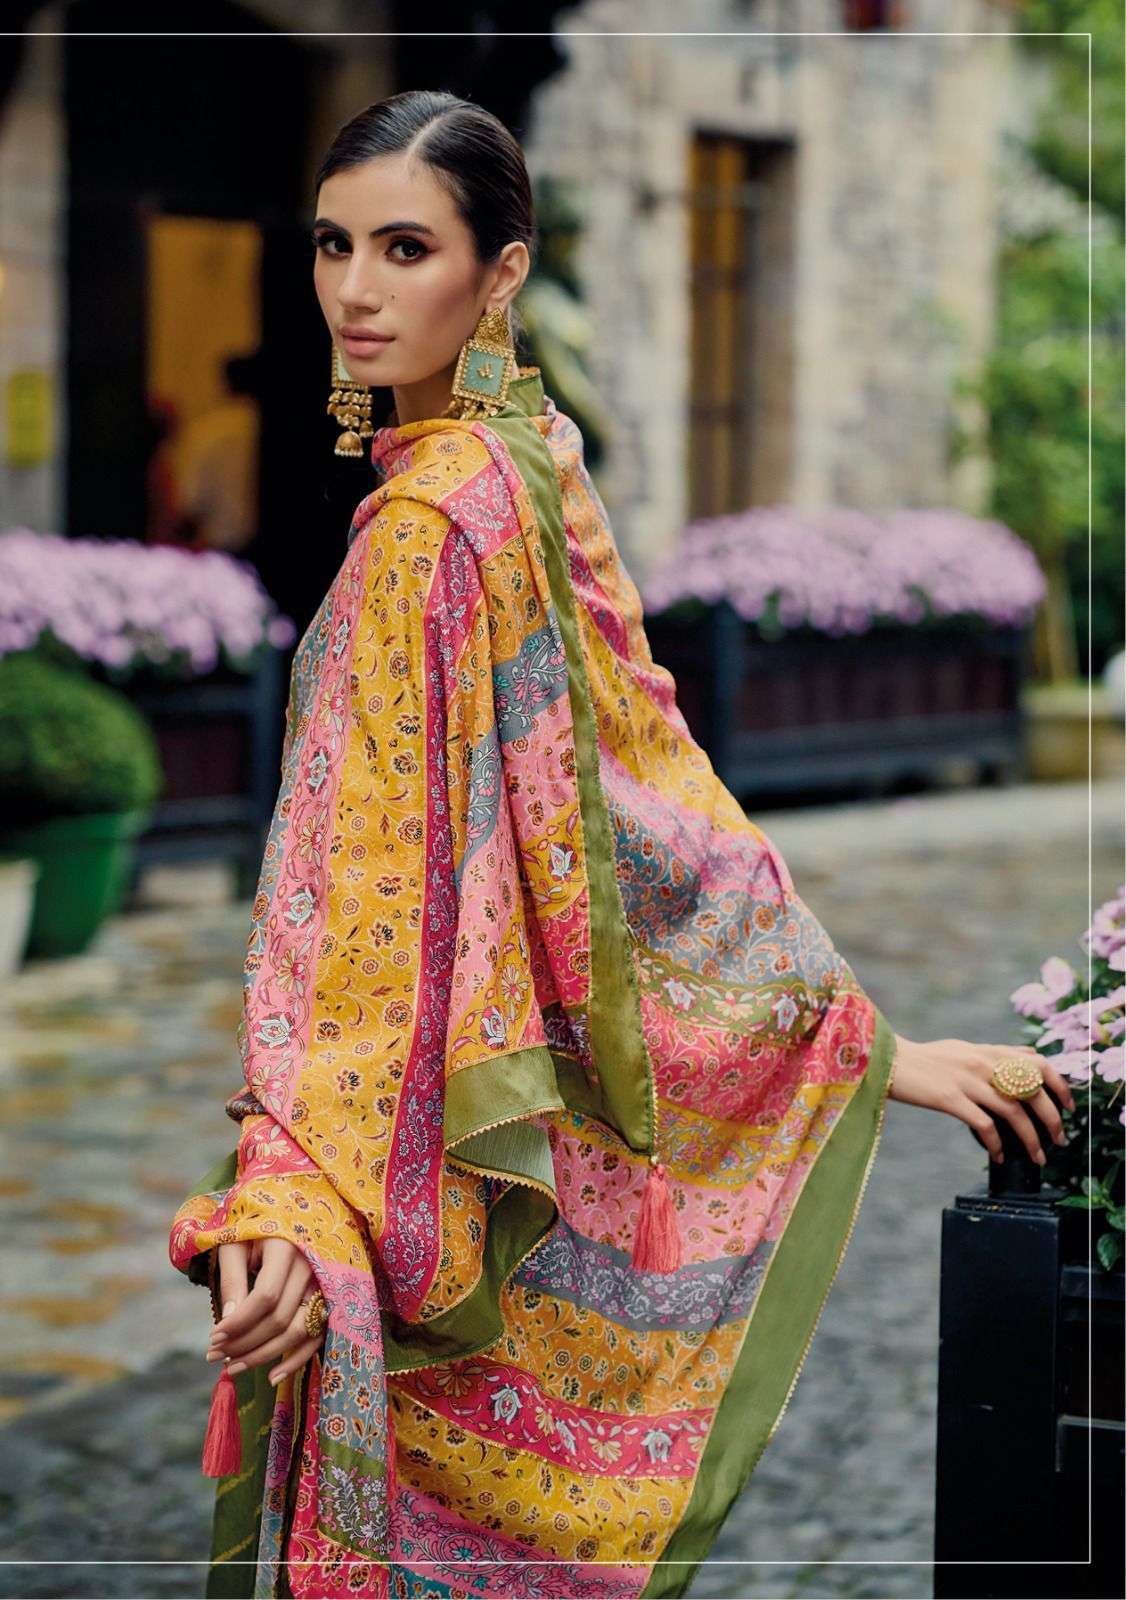 kailee fashion pearl 41281-41286 series designer pakistani fancy kurti set wholesaler surat gujarat